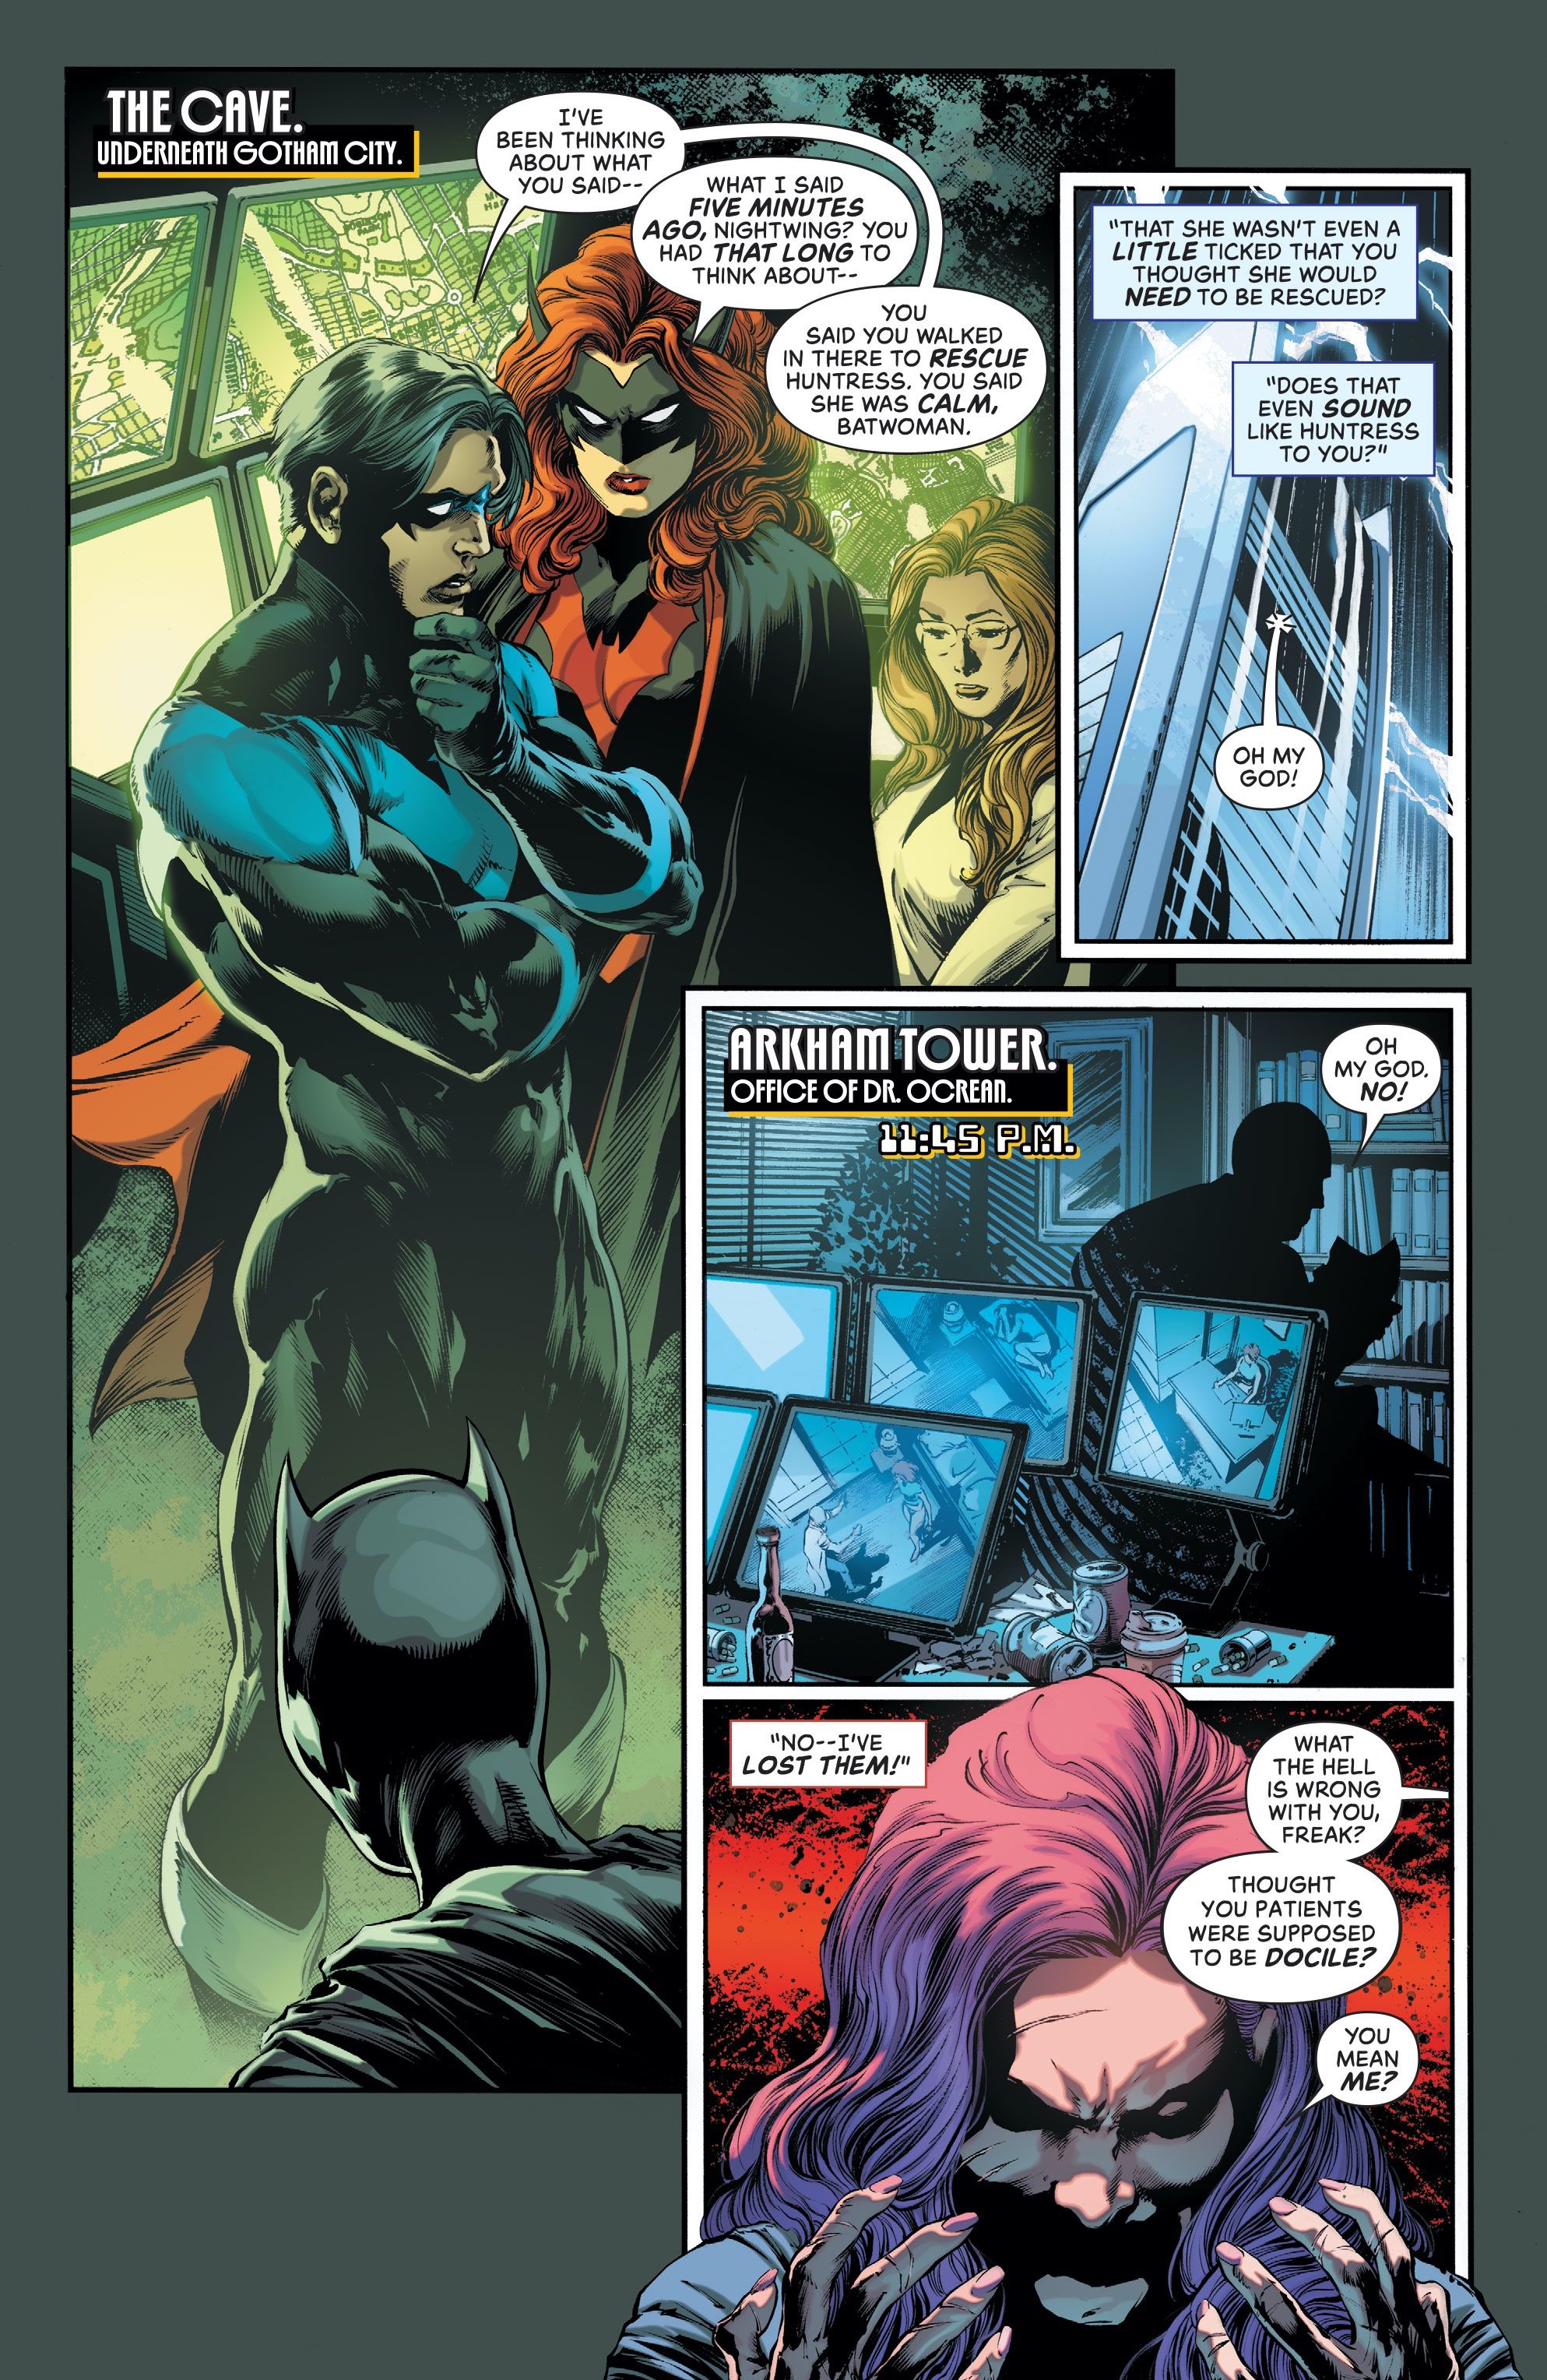 Detective Comics 1050 preview page